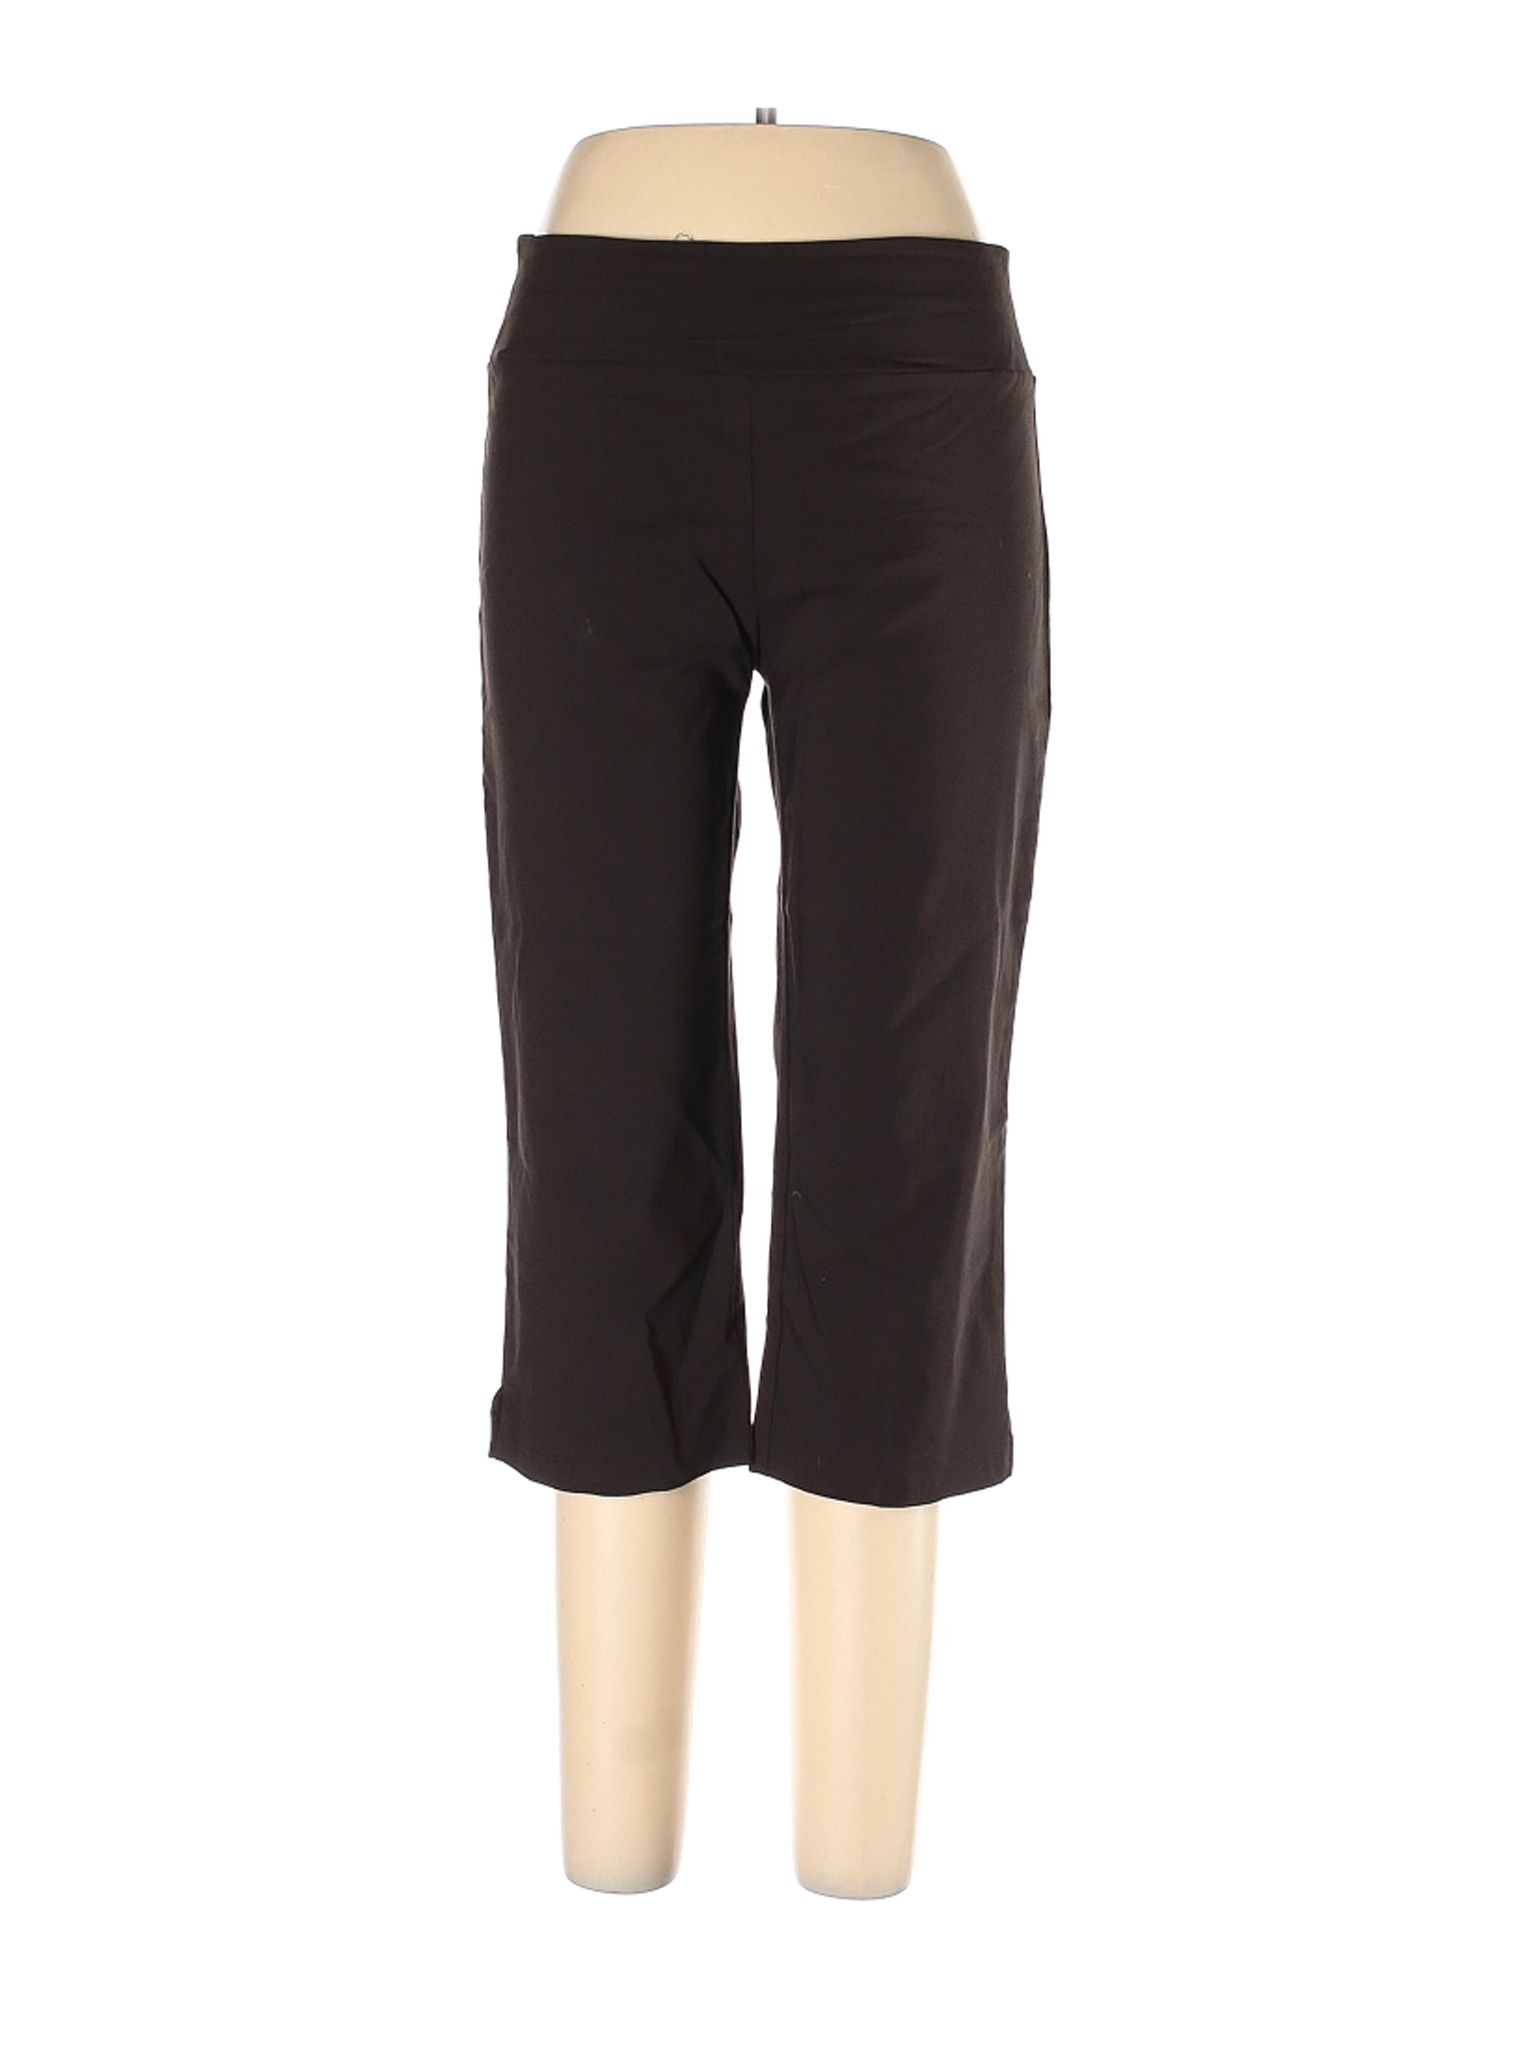 Attyre New York Women Black Casual Pants 12 Petites | eBay